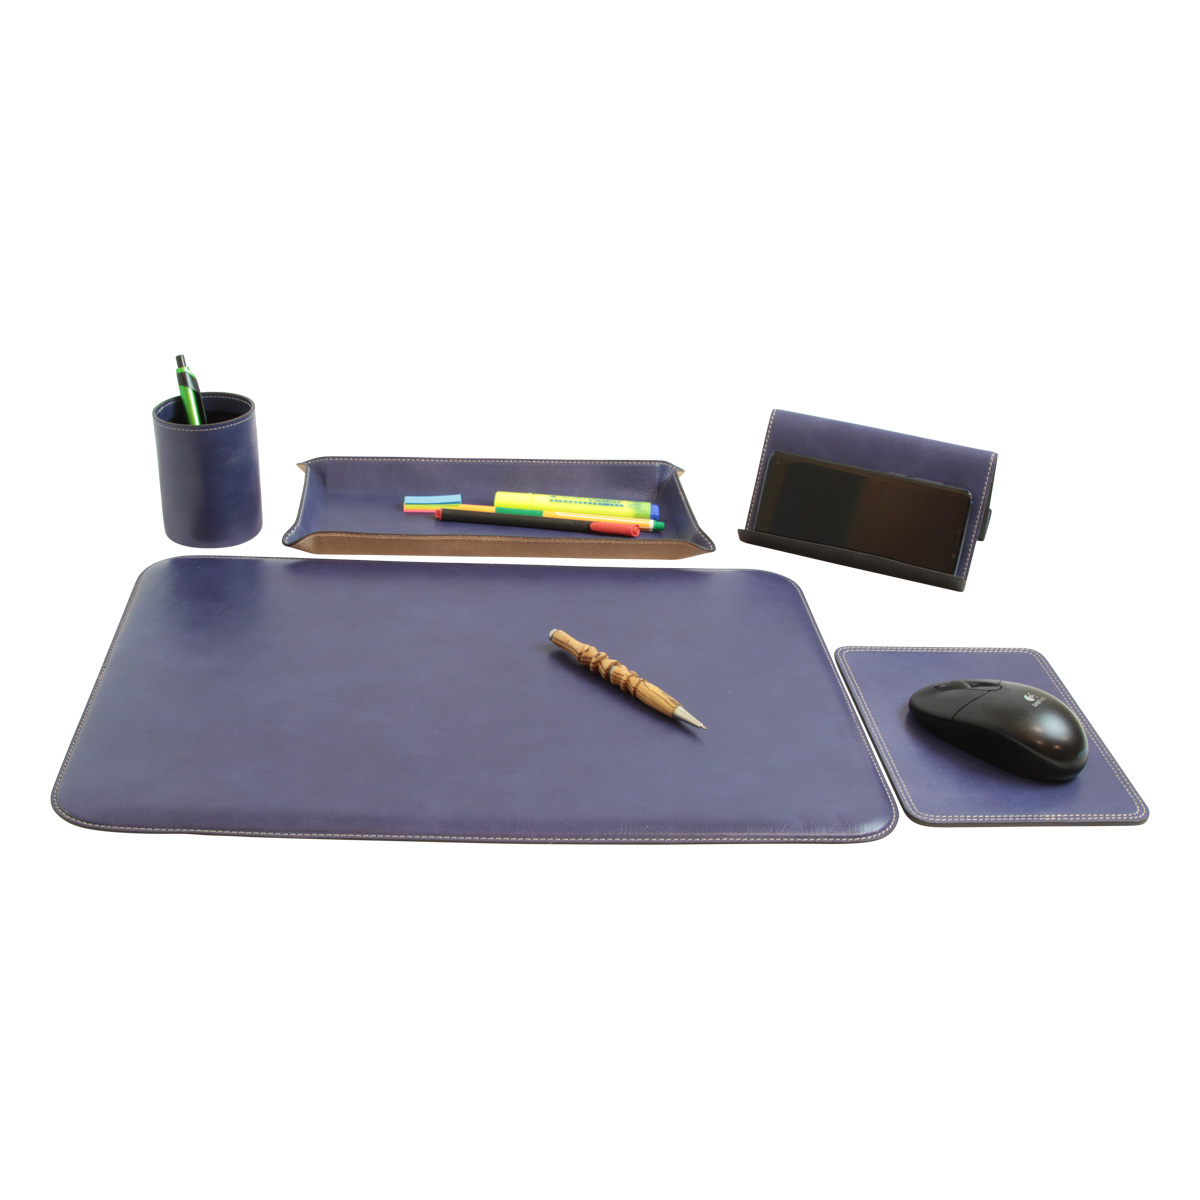 Leather desk kit - 5 pcs  | 769089CB UK | Old Angler Firenze